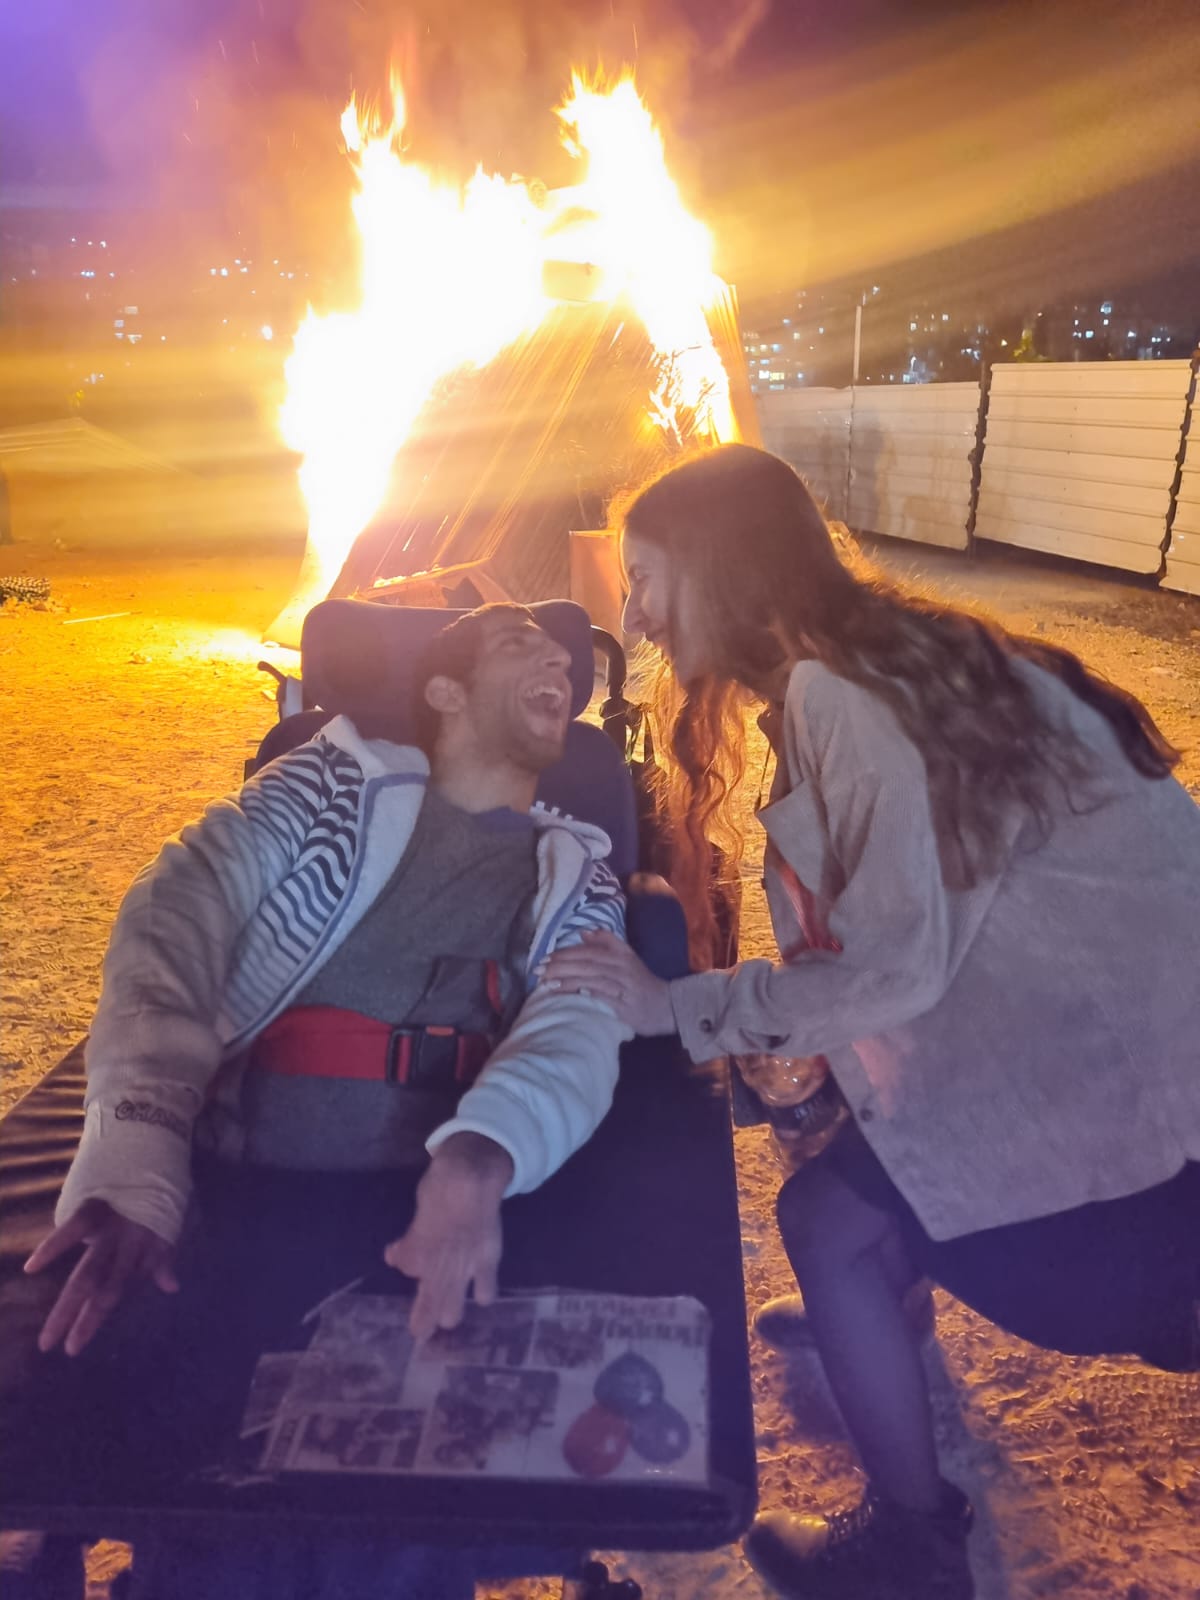 Young man in wheelchair in front of a bonfire בחור בכסא גלגלים לפני מדורה